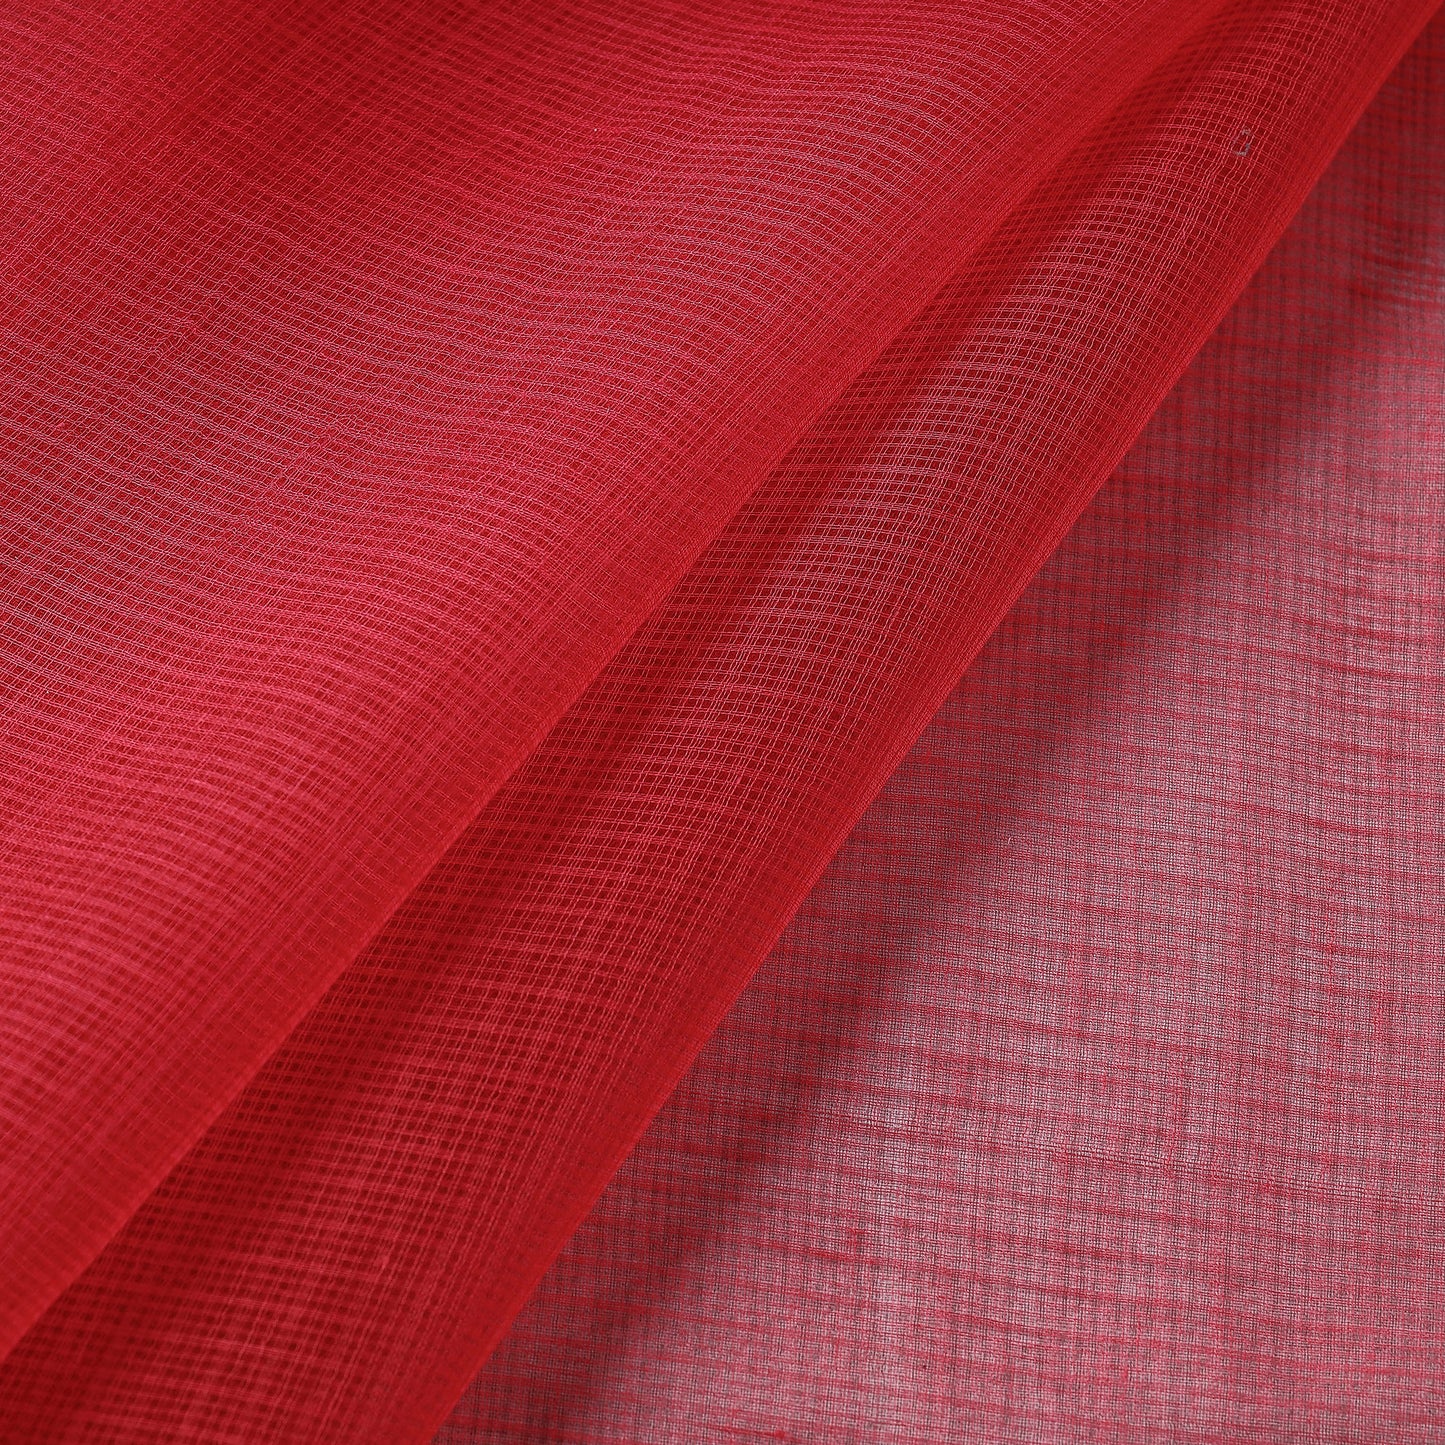 Red - Kota Doria Weaving Plain Cotton Fabric